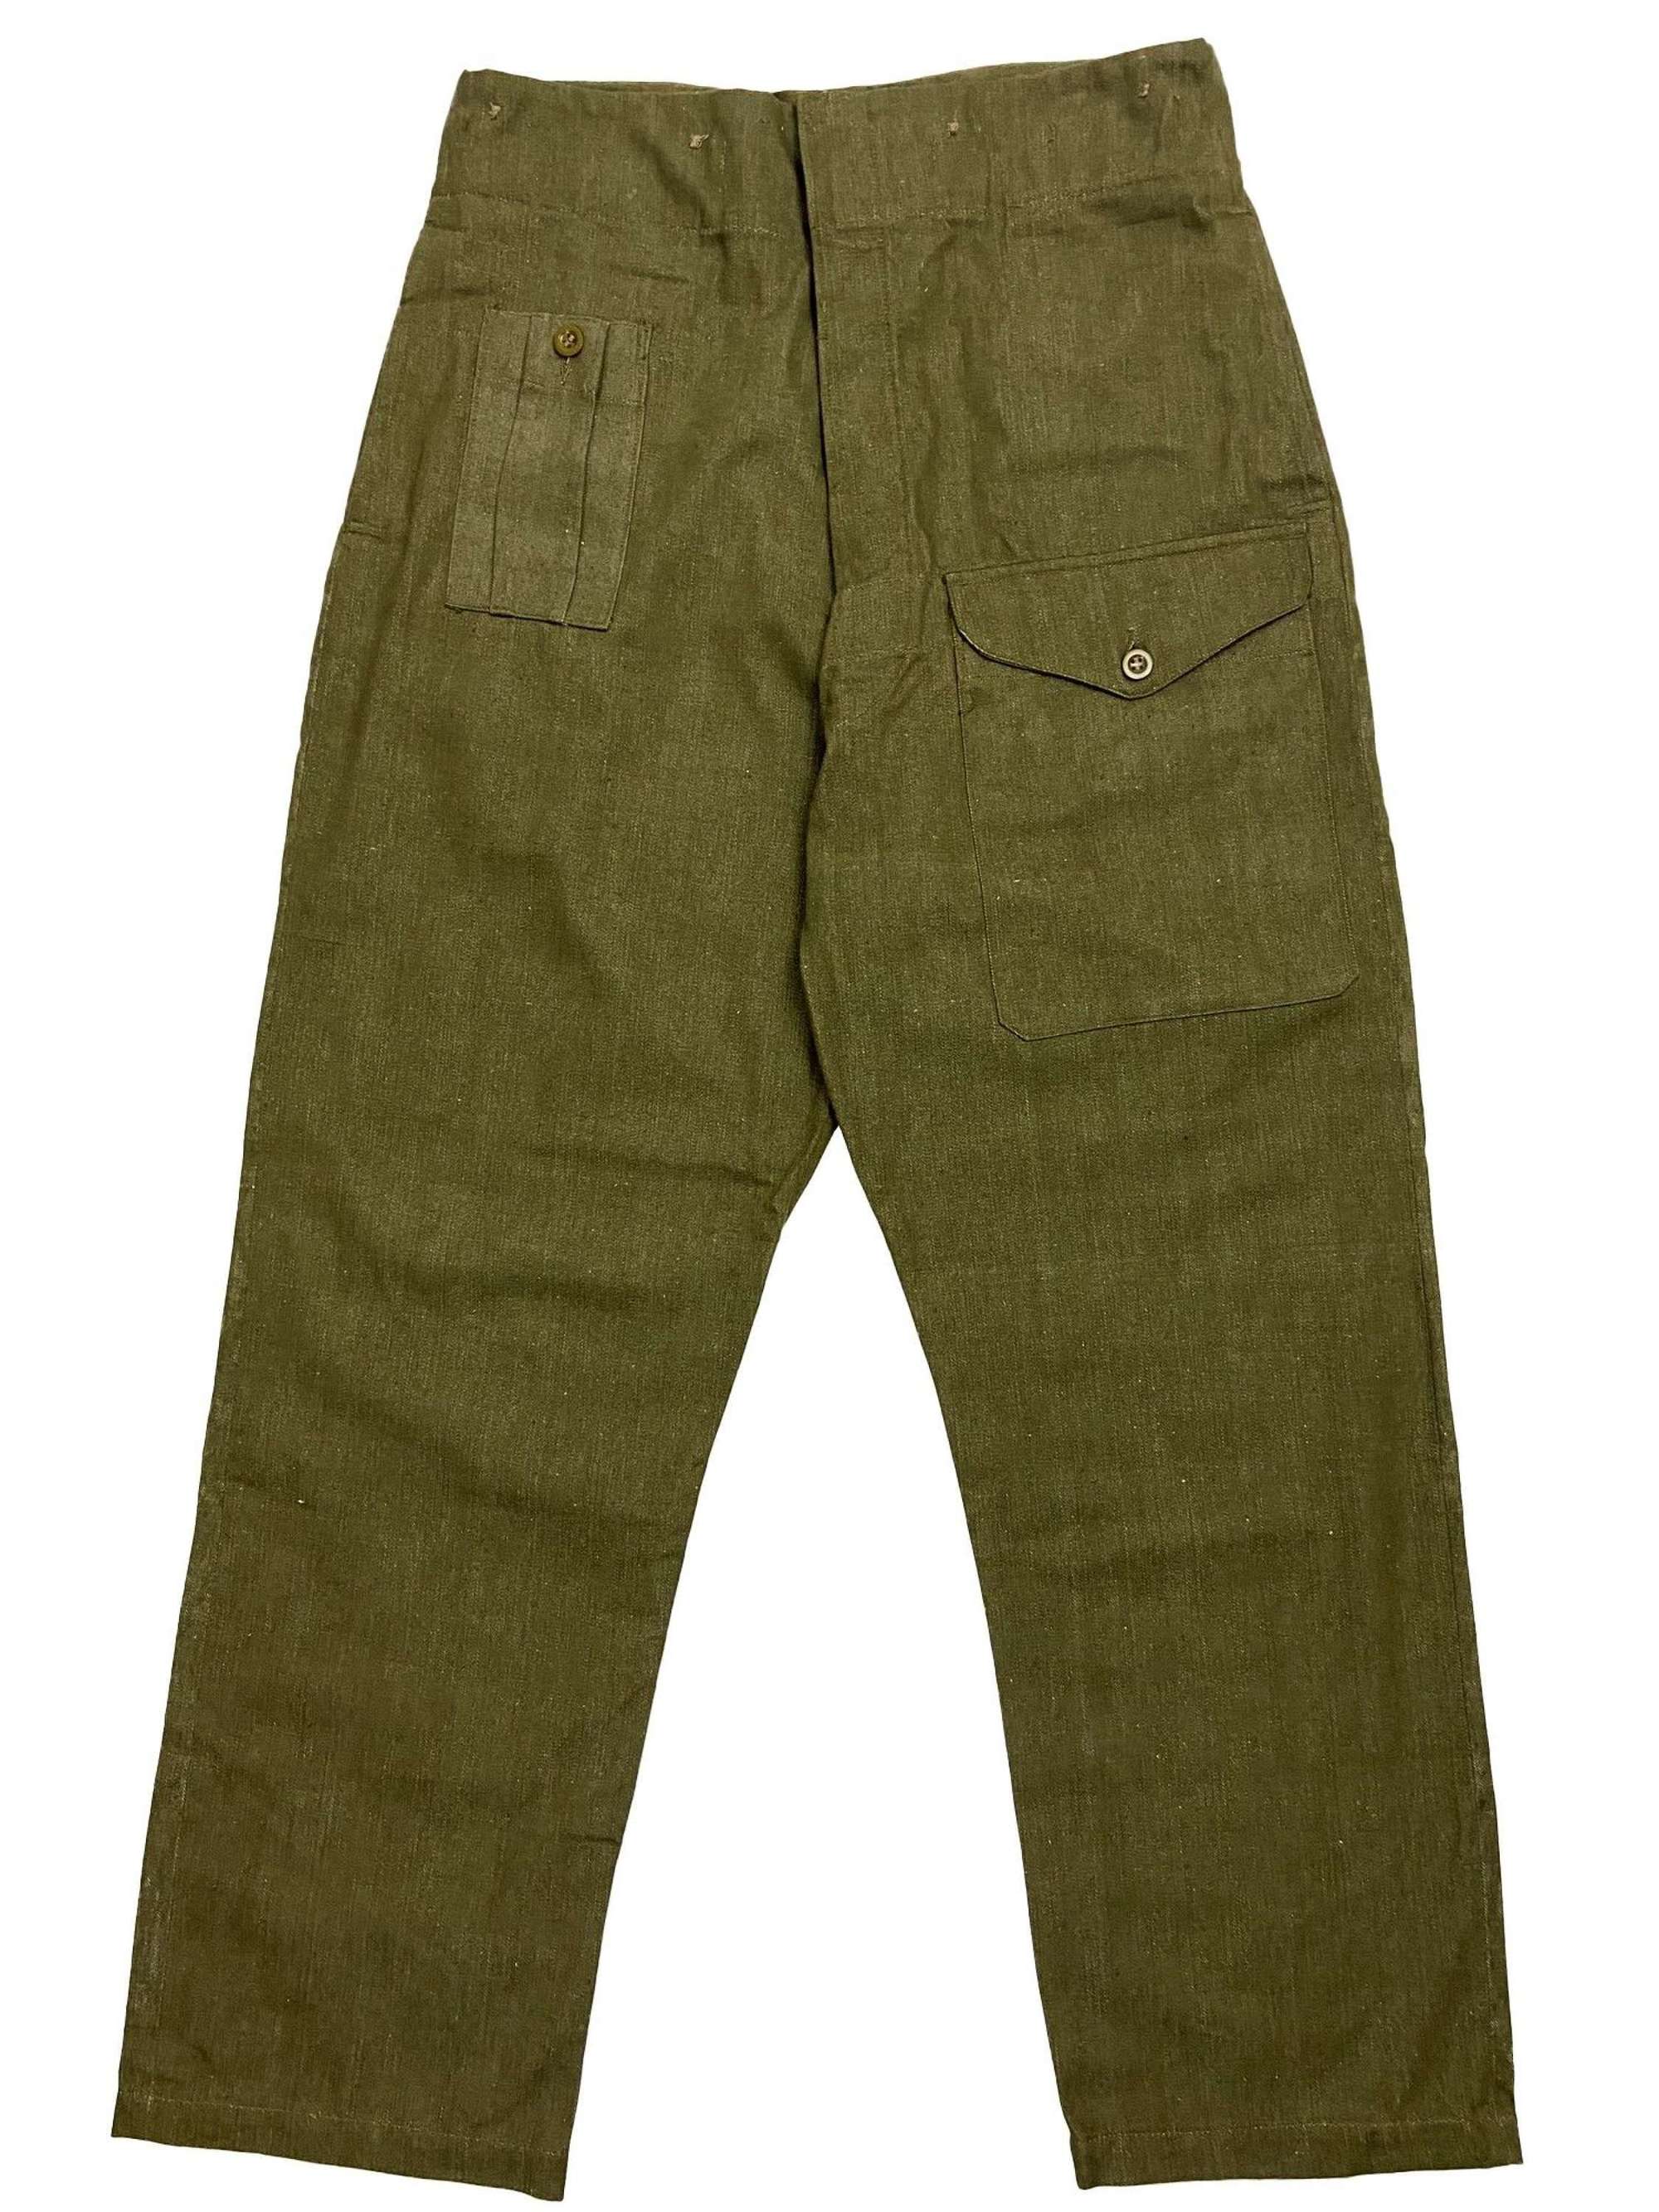 Original 1953 Dated British Denim Battledress Trousers - Size 9